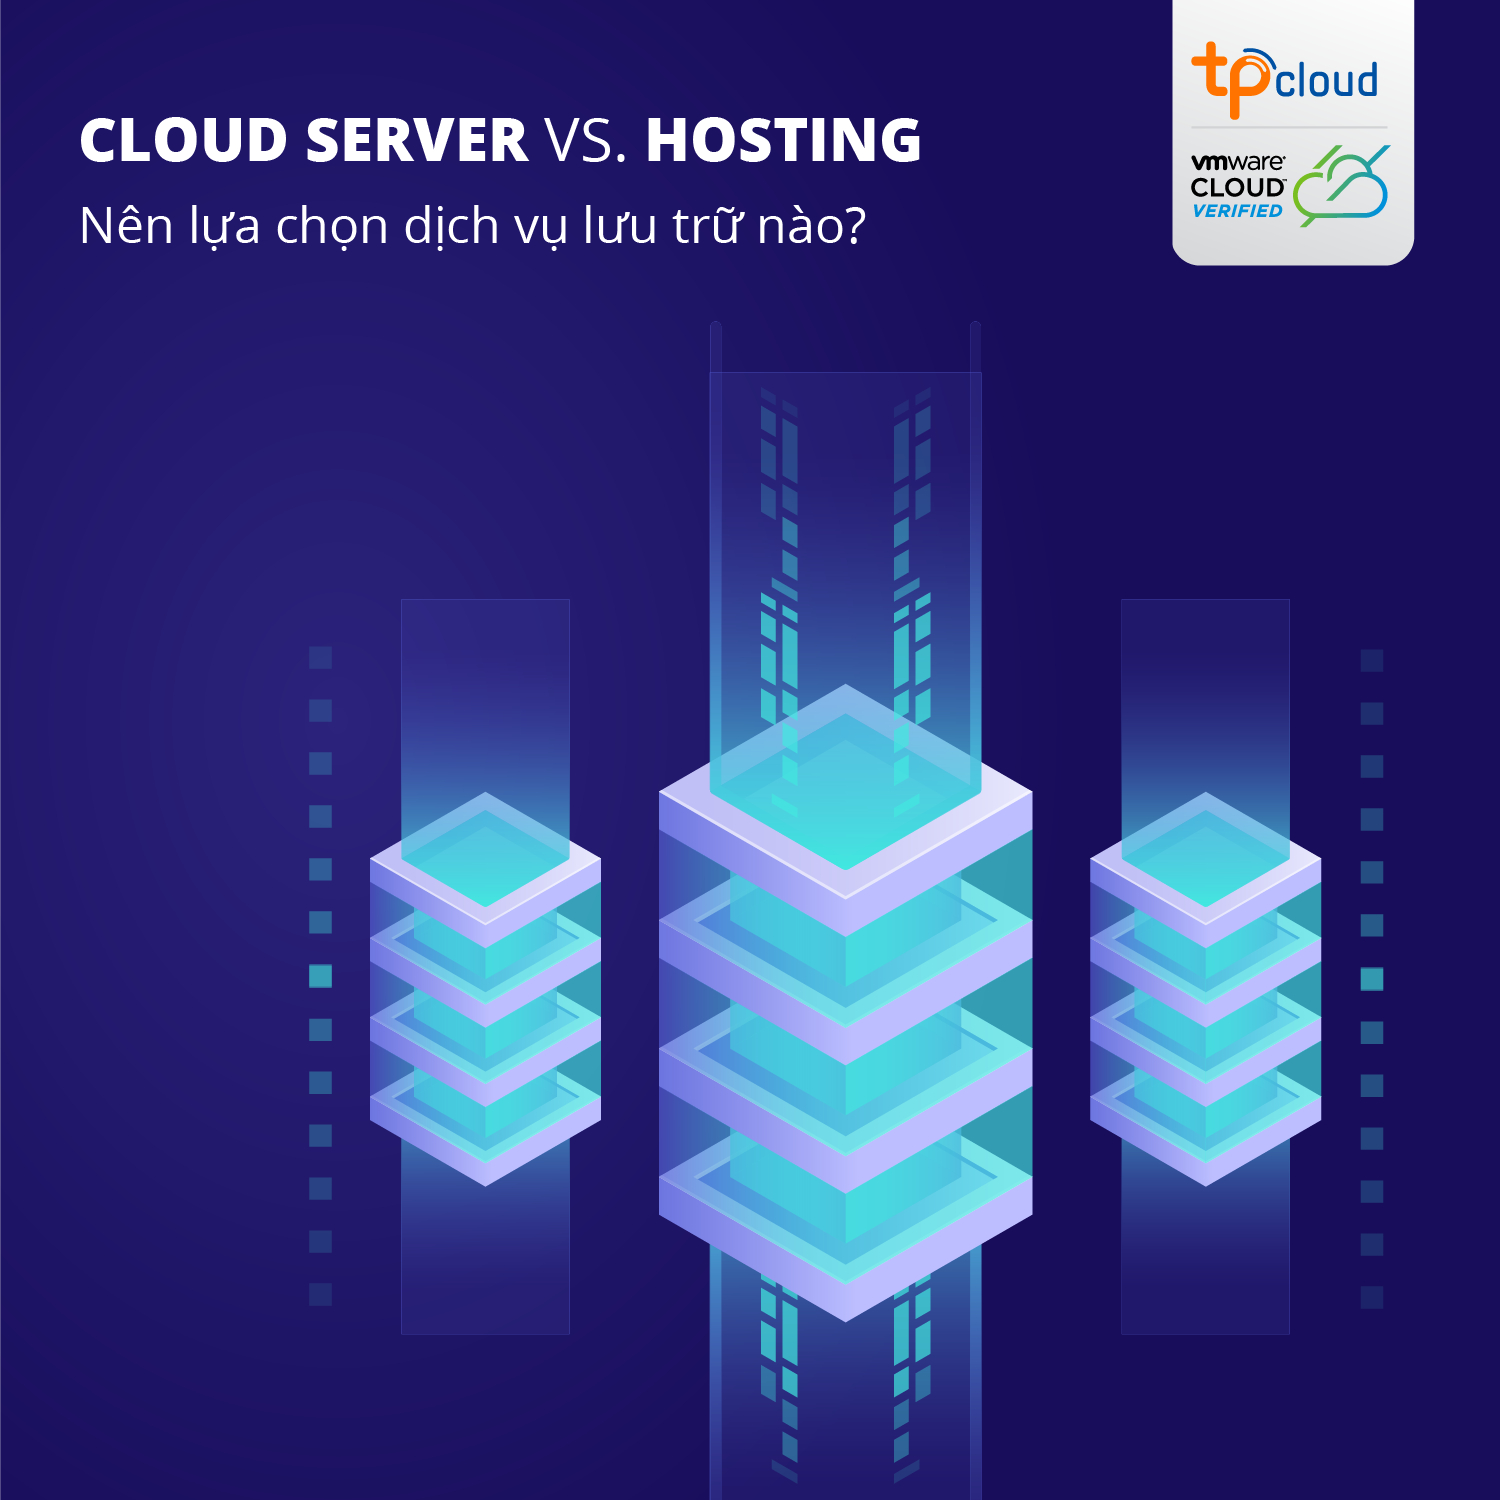 nen-lua-chon-dich-vu-cloud-server-hay-hosting